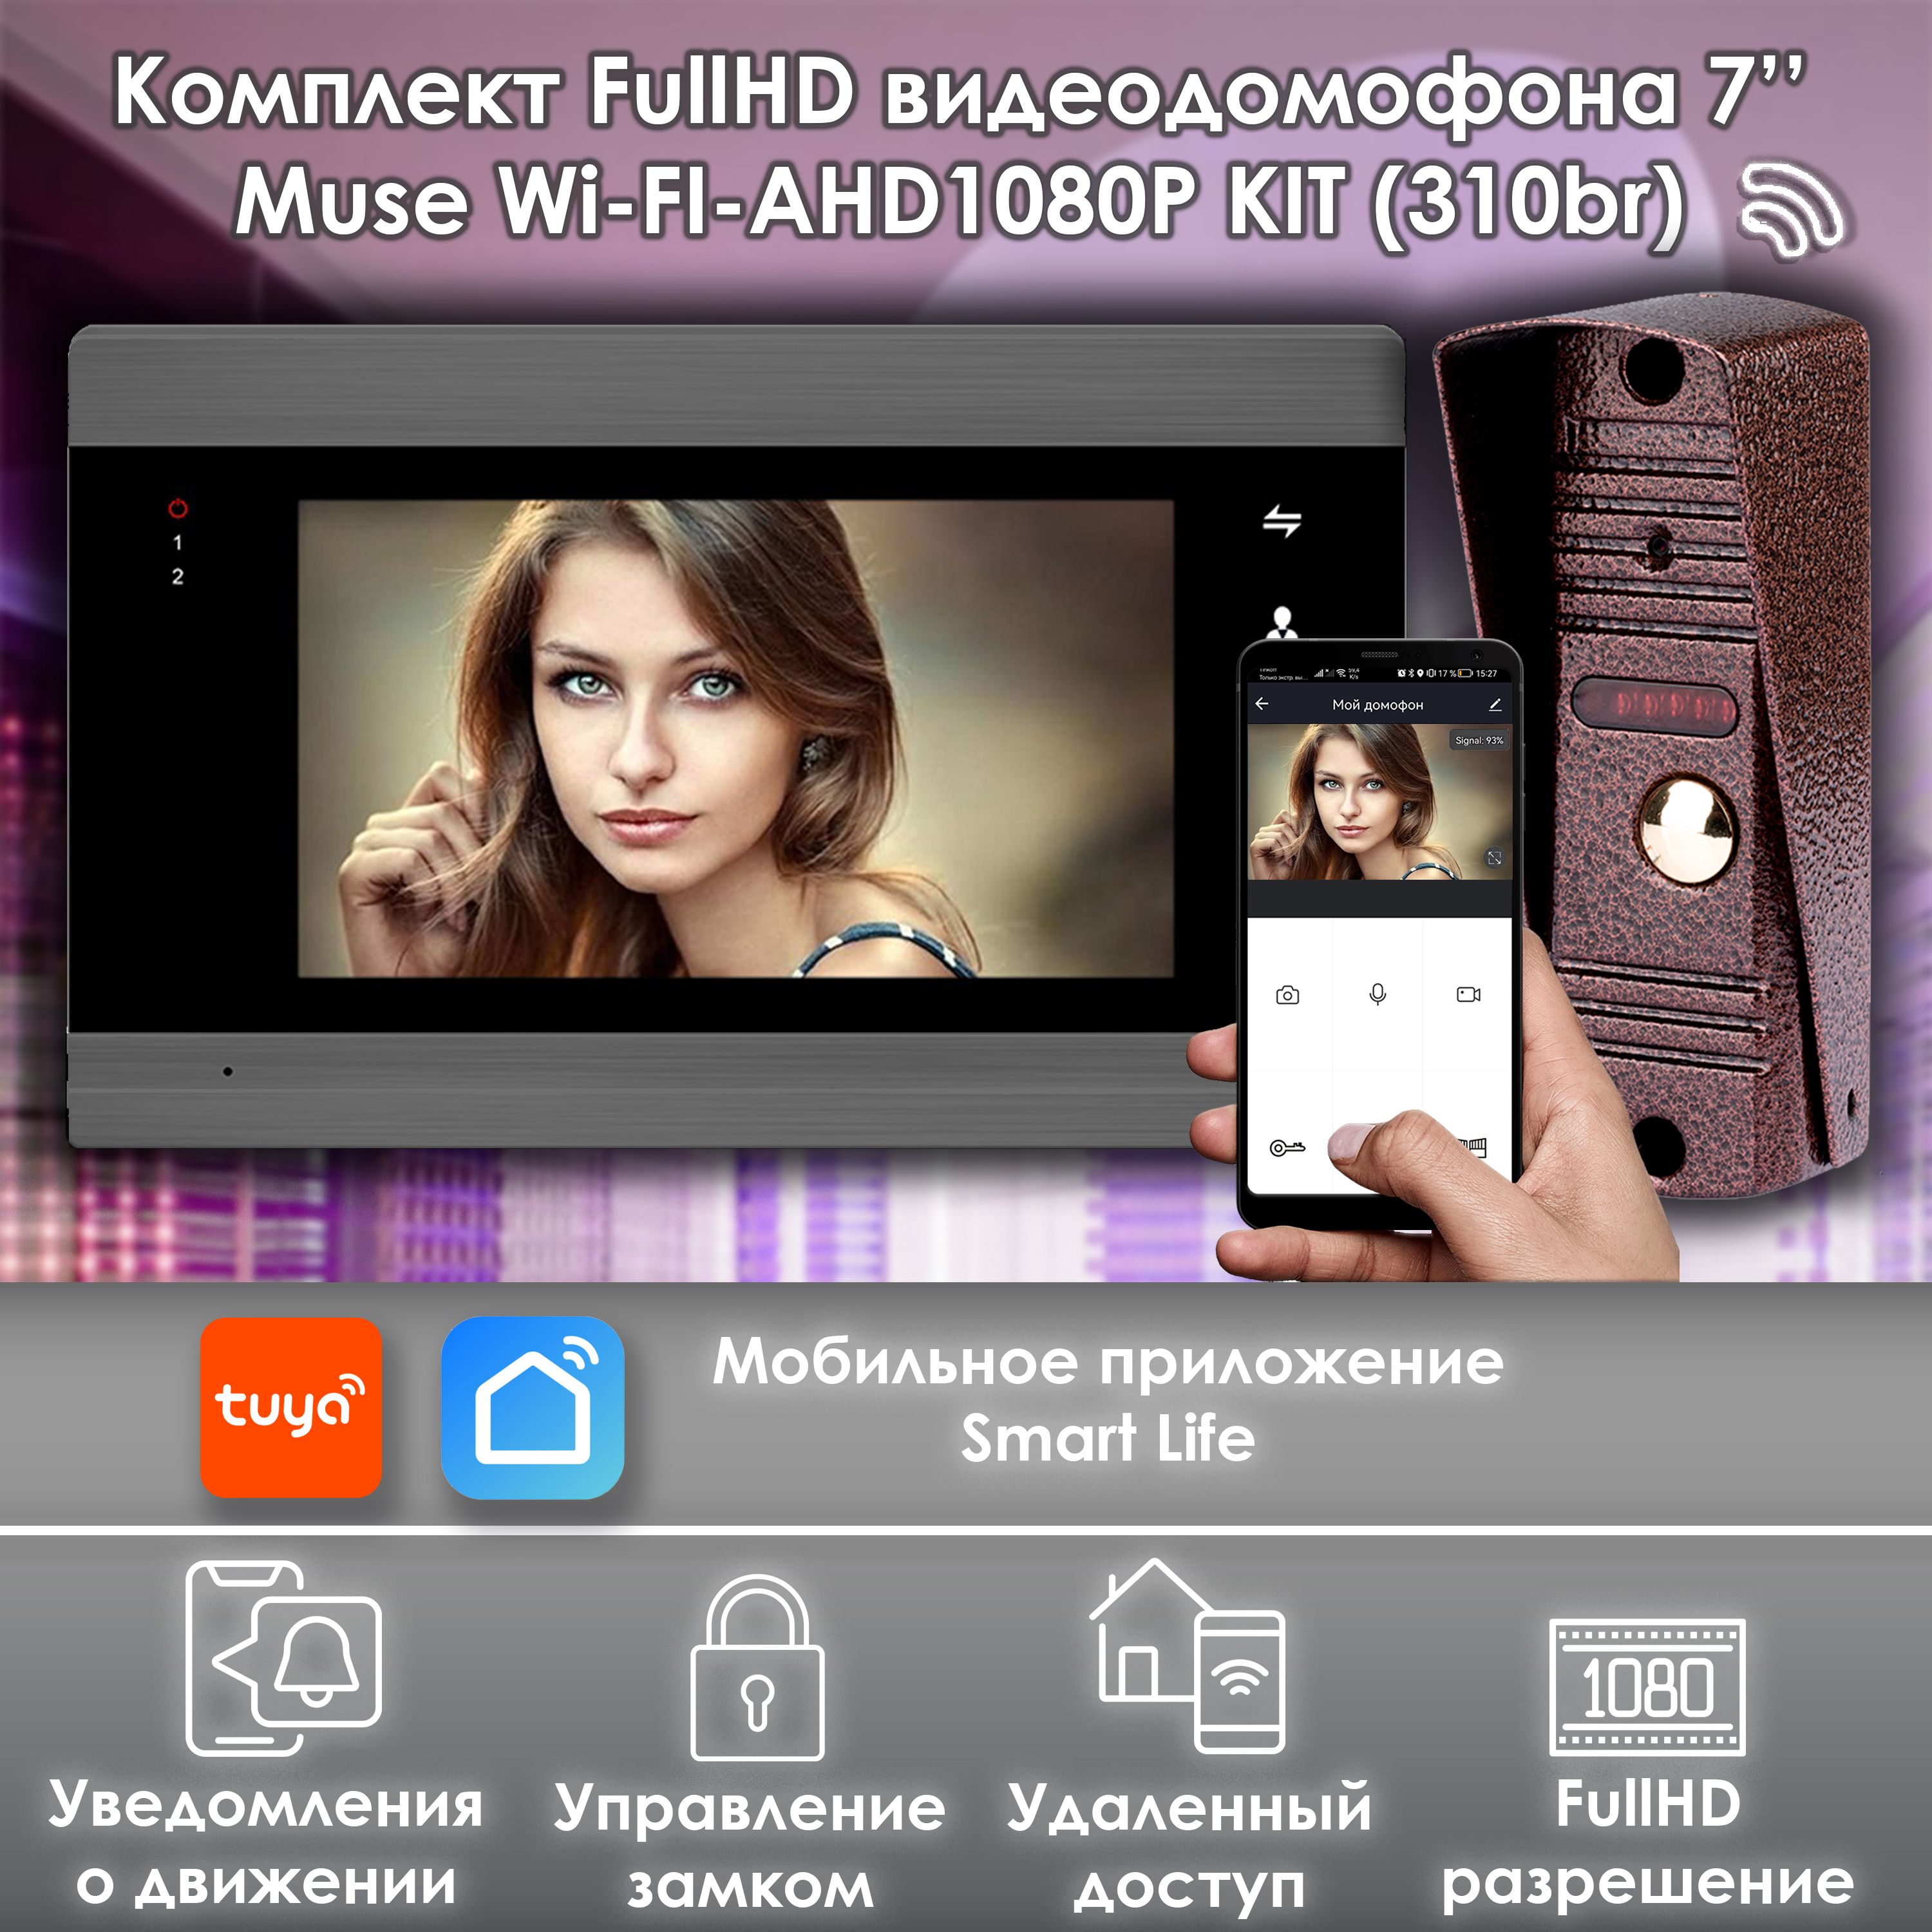 Комплект видеодомофона Alfavision MUSE WIFI-KIT (310br) Full HD 7 дюймов комплект видеодомофона alfavision olesya wi fi ahd1080p full hd 310br 7 дюймов